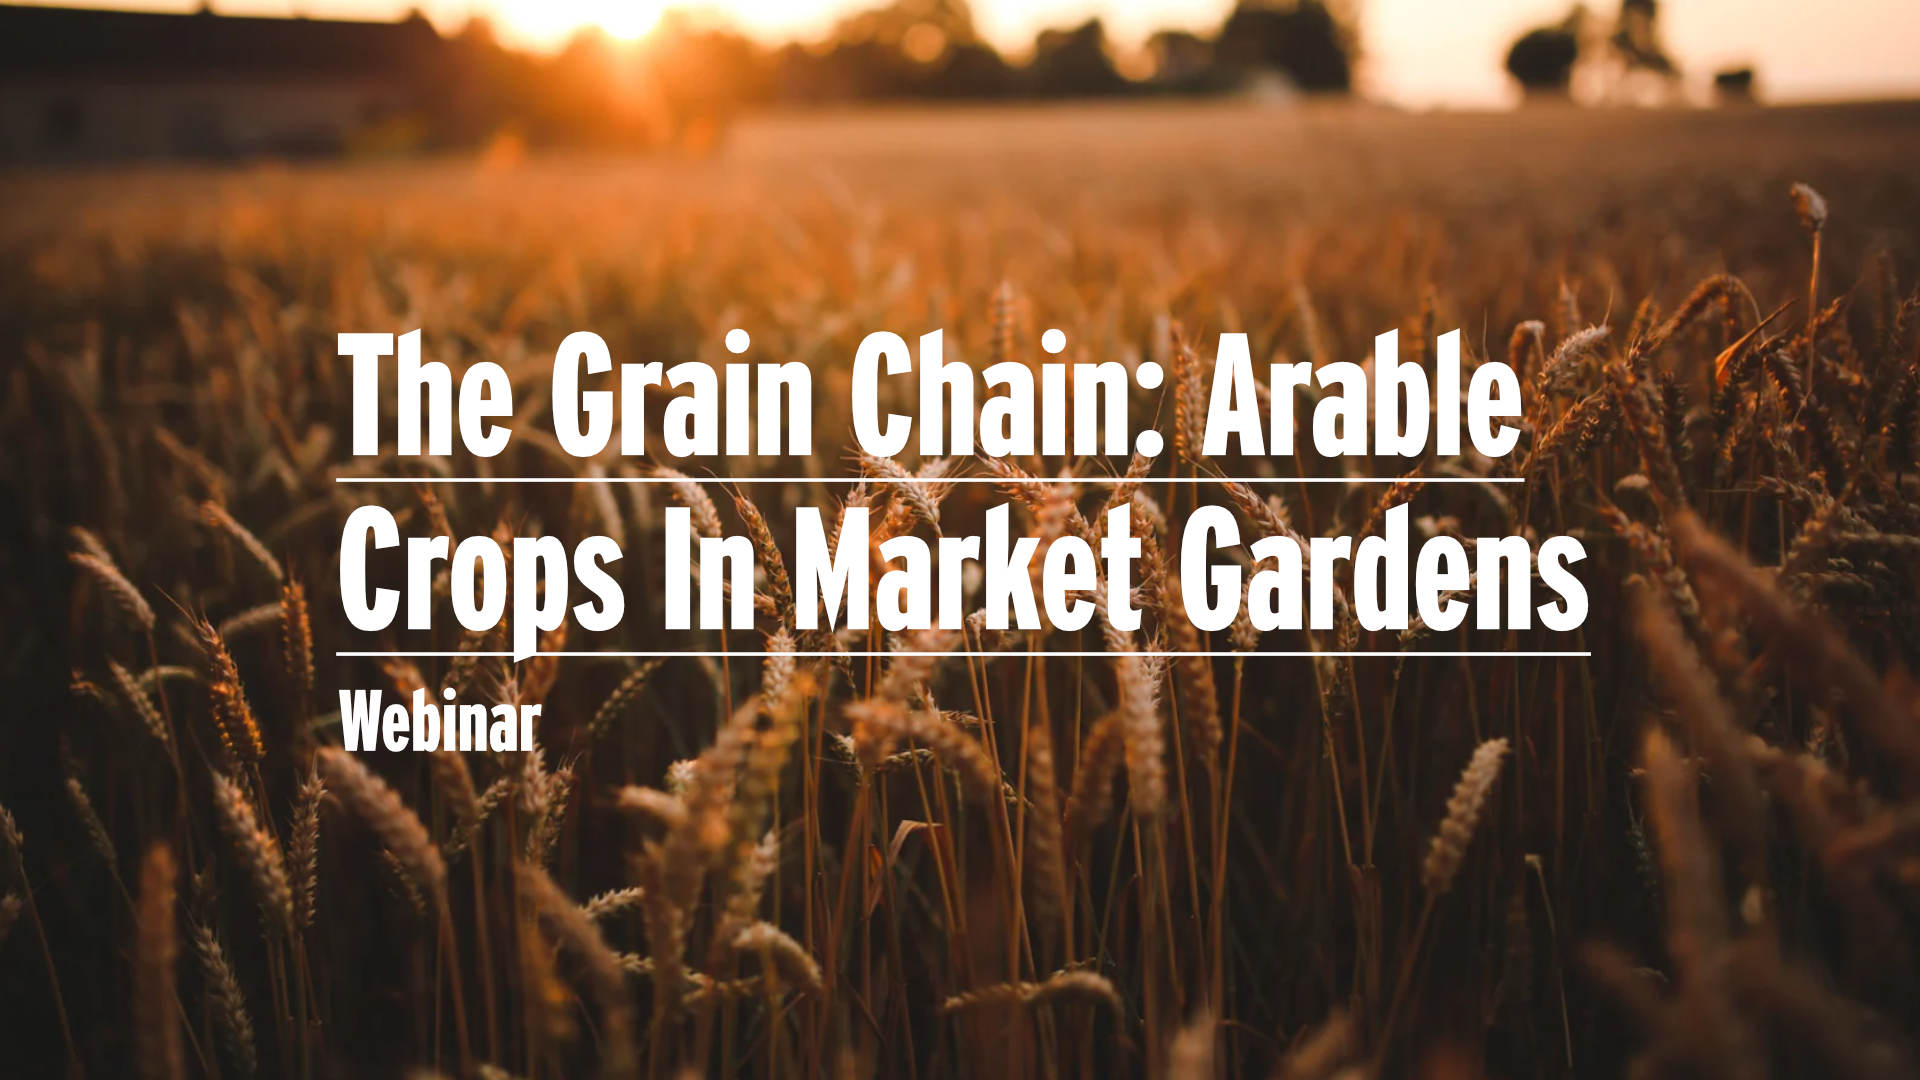 Arable Crops Market Gardens - Image